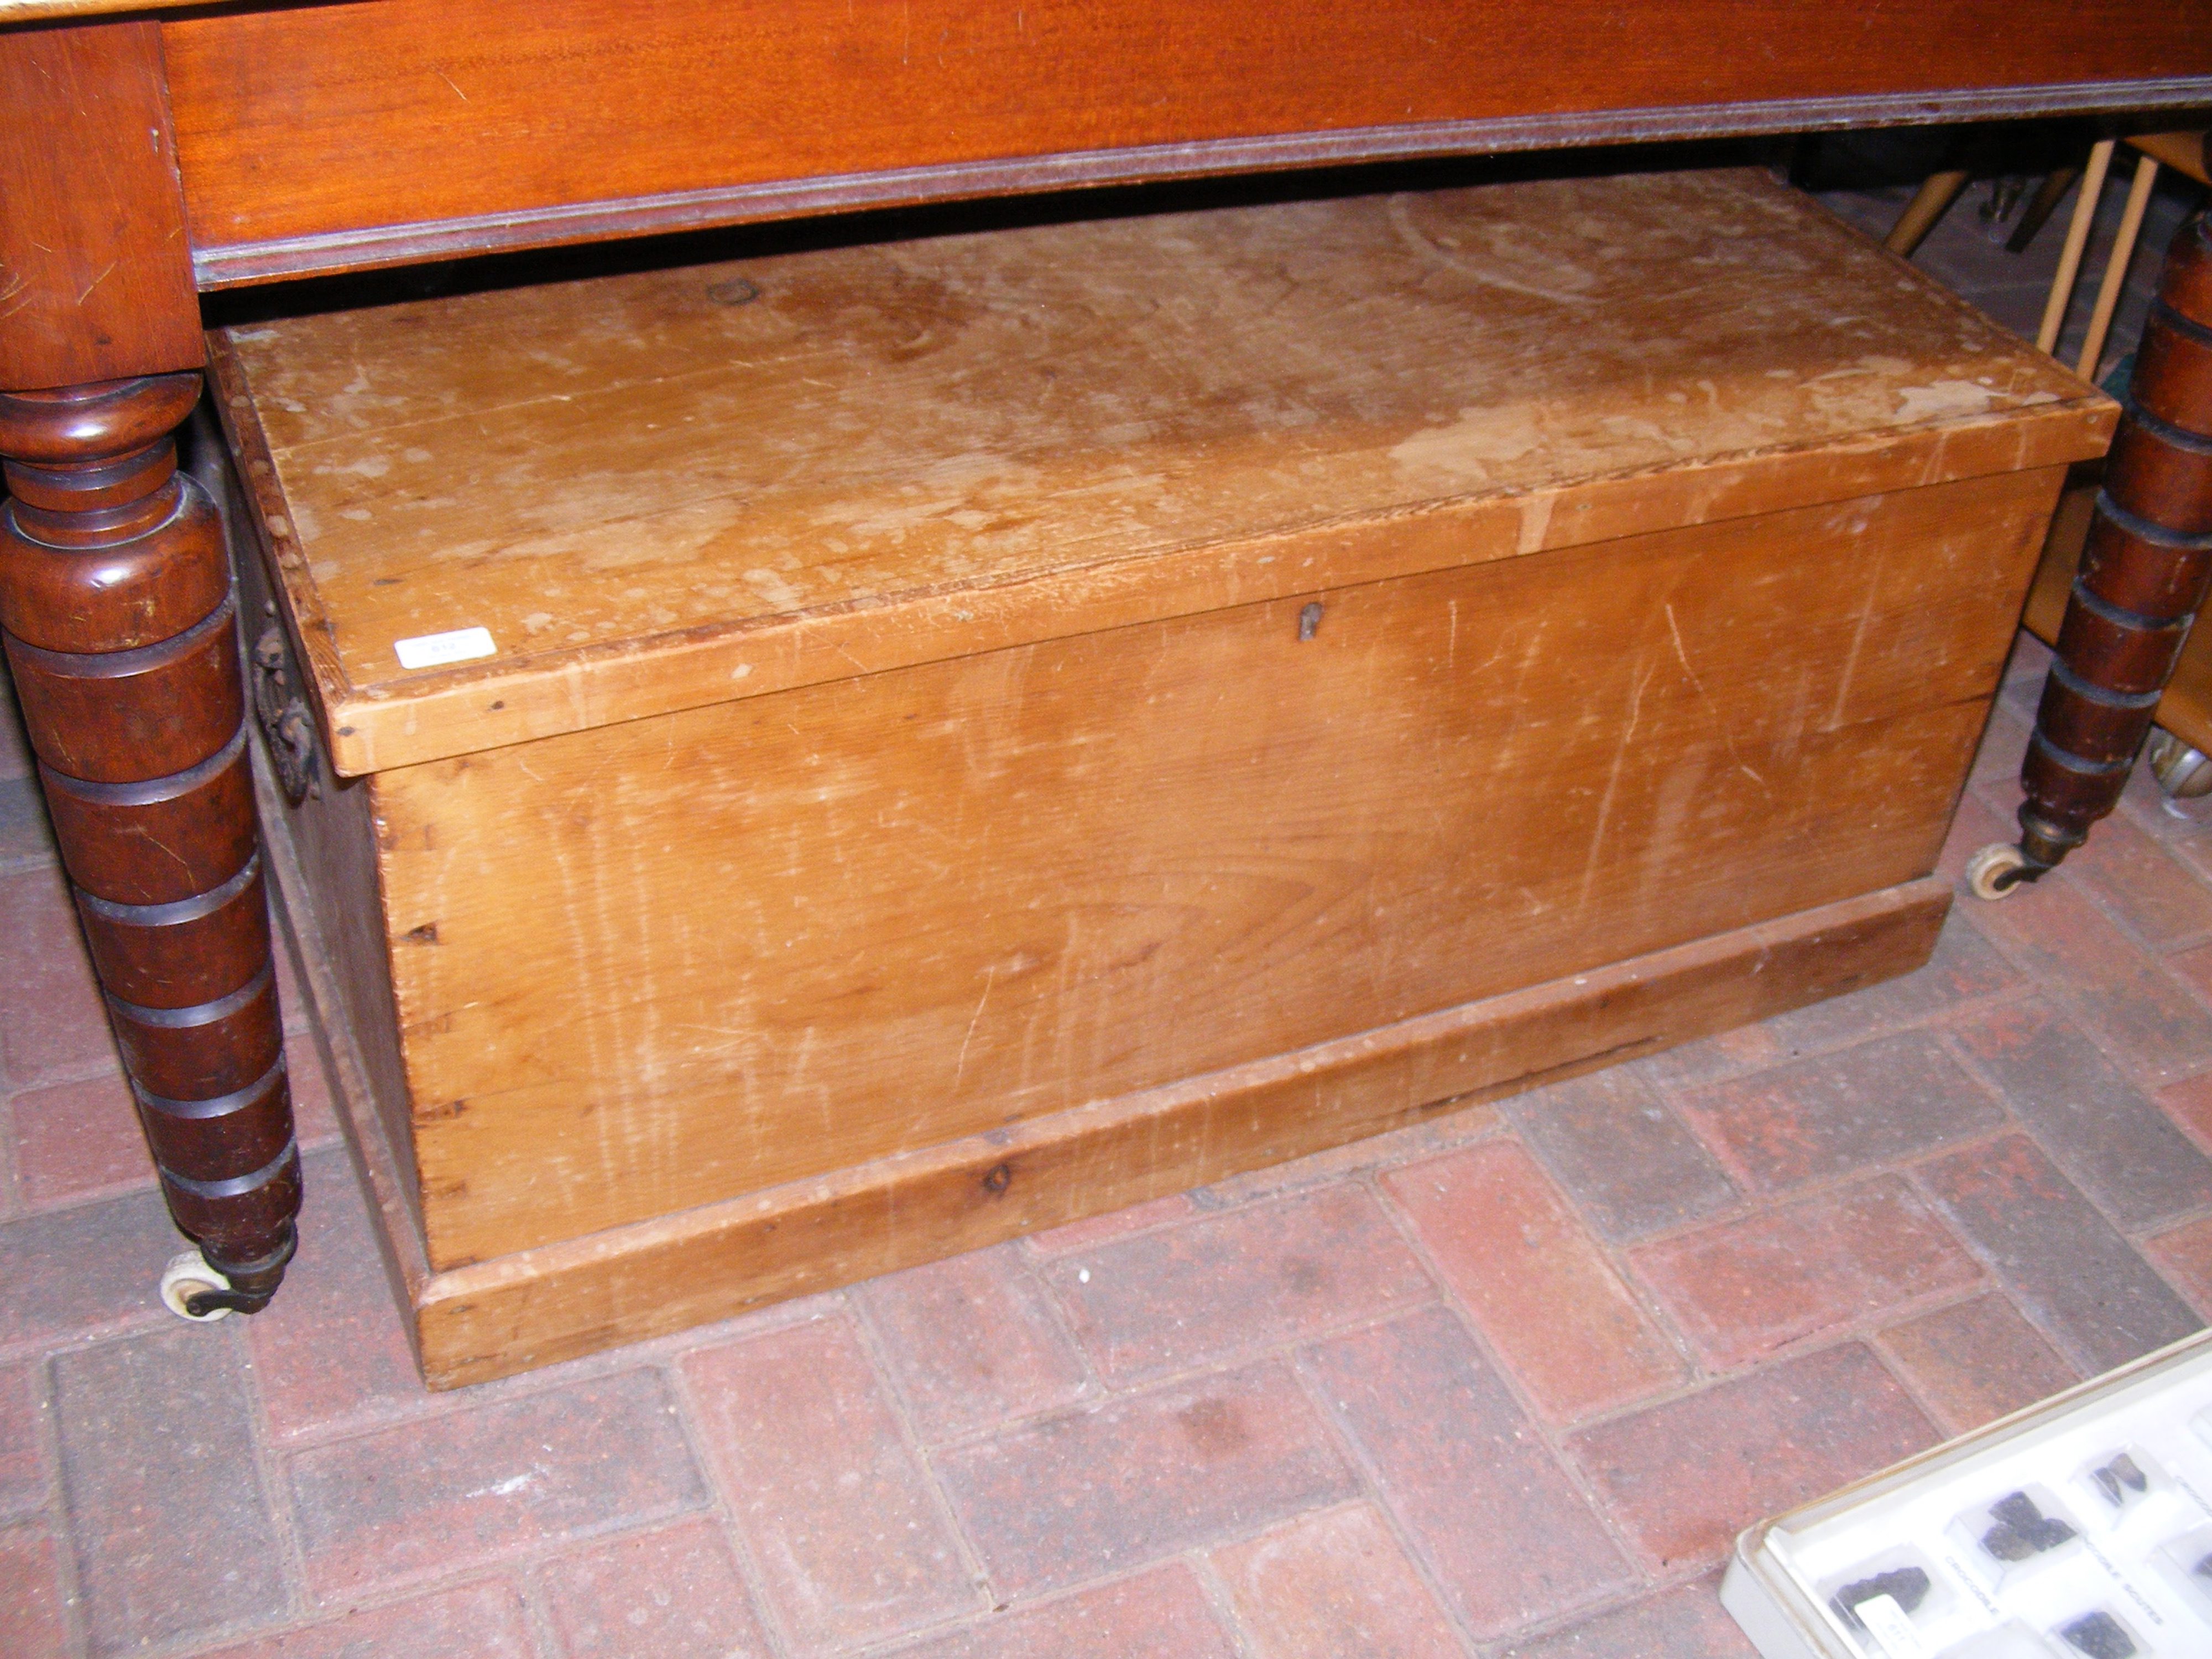 An old pine blanket box - width 96cm